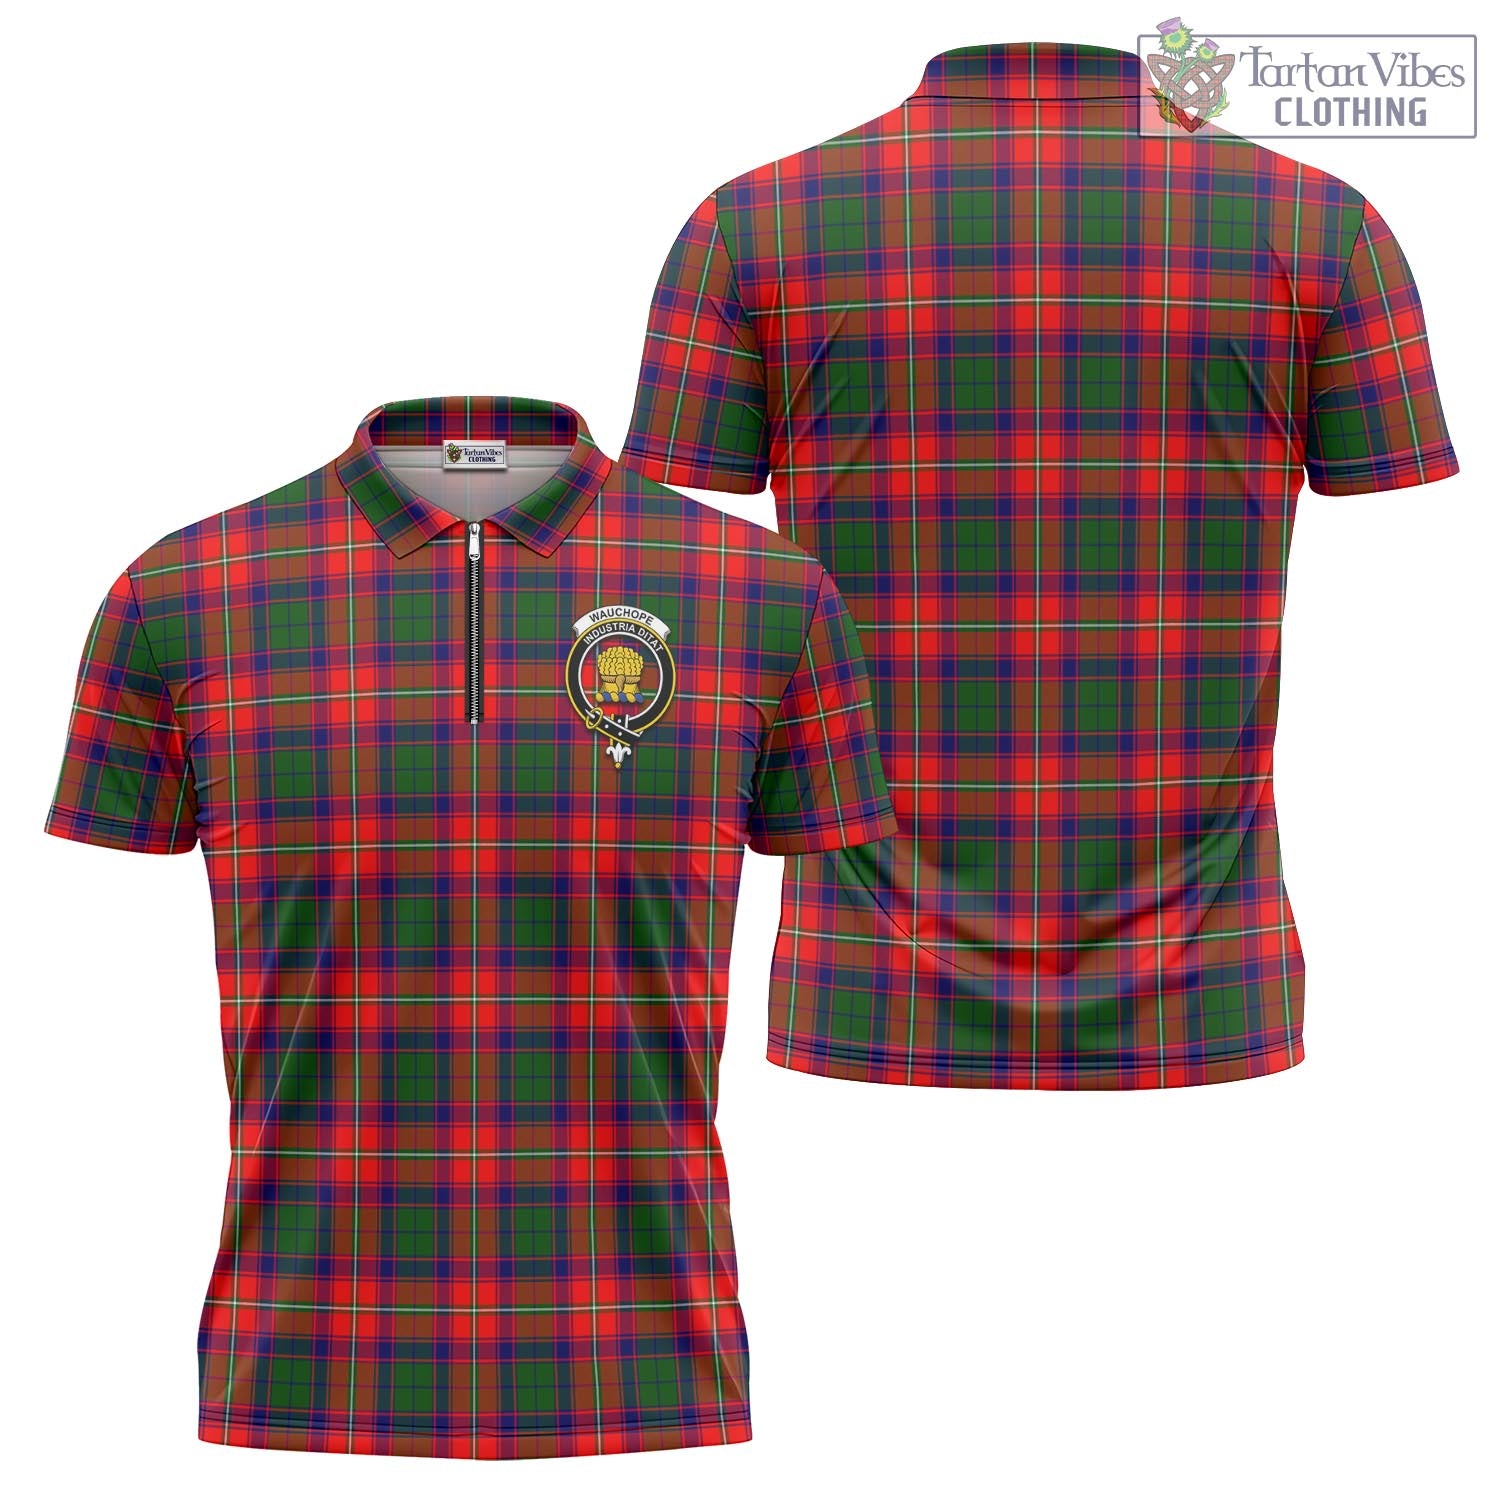 Tartan Vibes Clothing Wauchope Tartan Zipper Polo Shirt with Family Crest